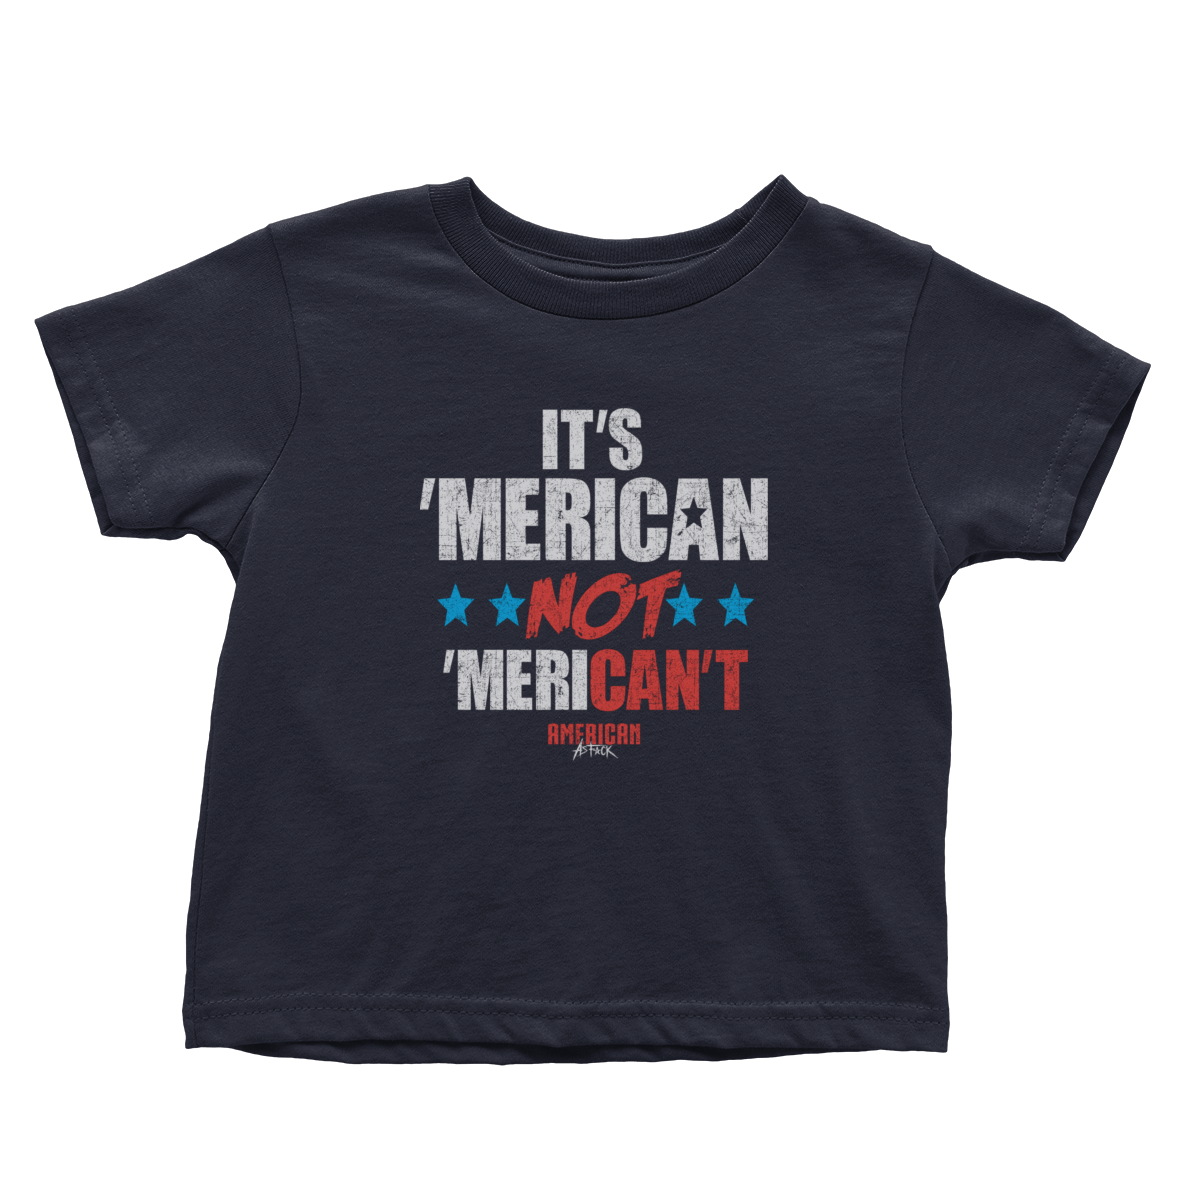 Apparel Premium Toddler Shirt / Navy / 2T It's Merican Not Merican't - Toddlers